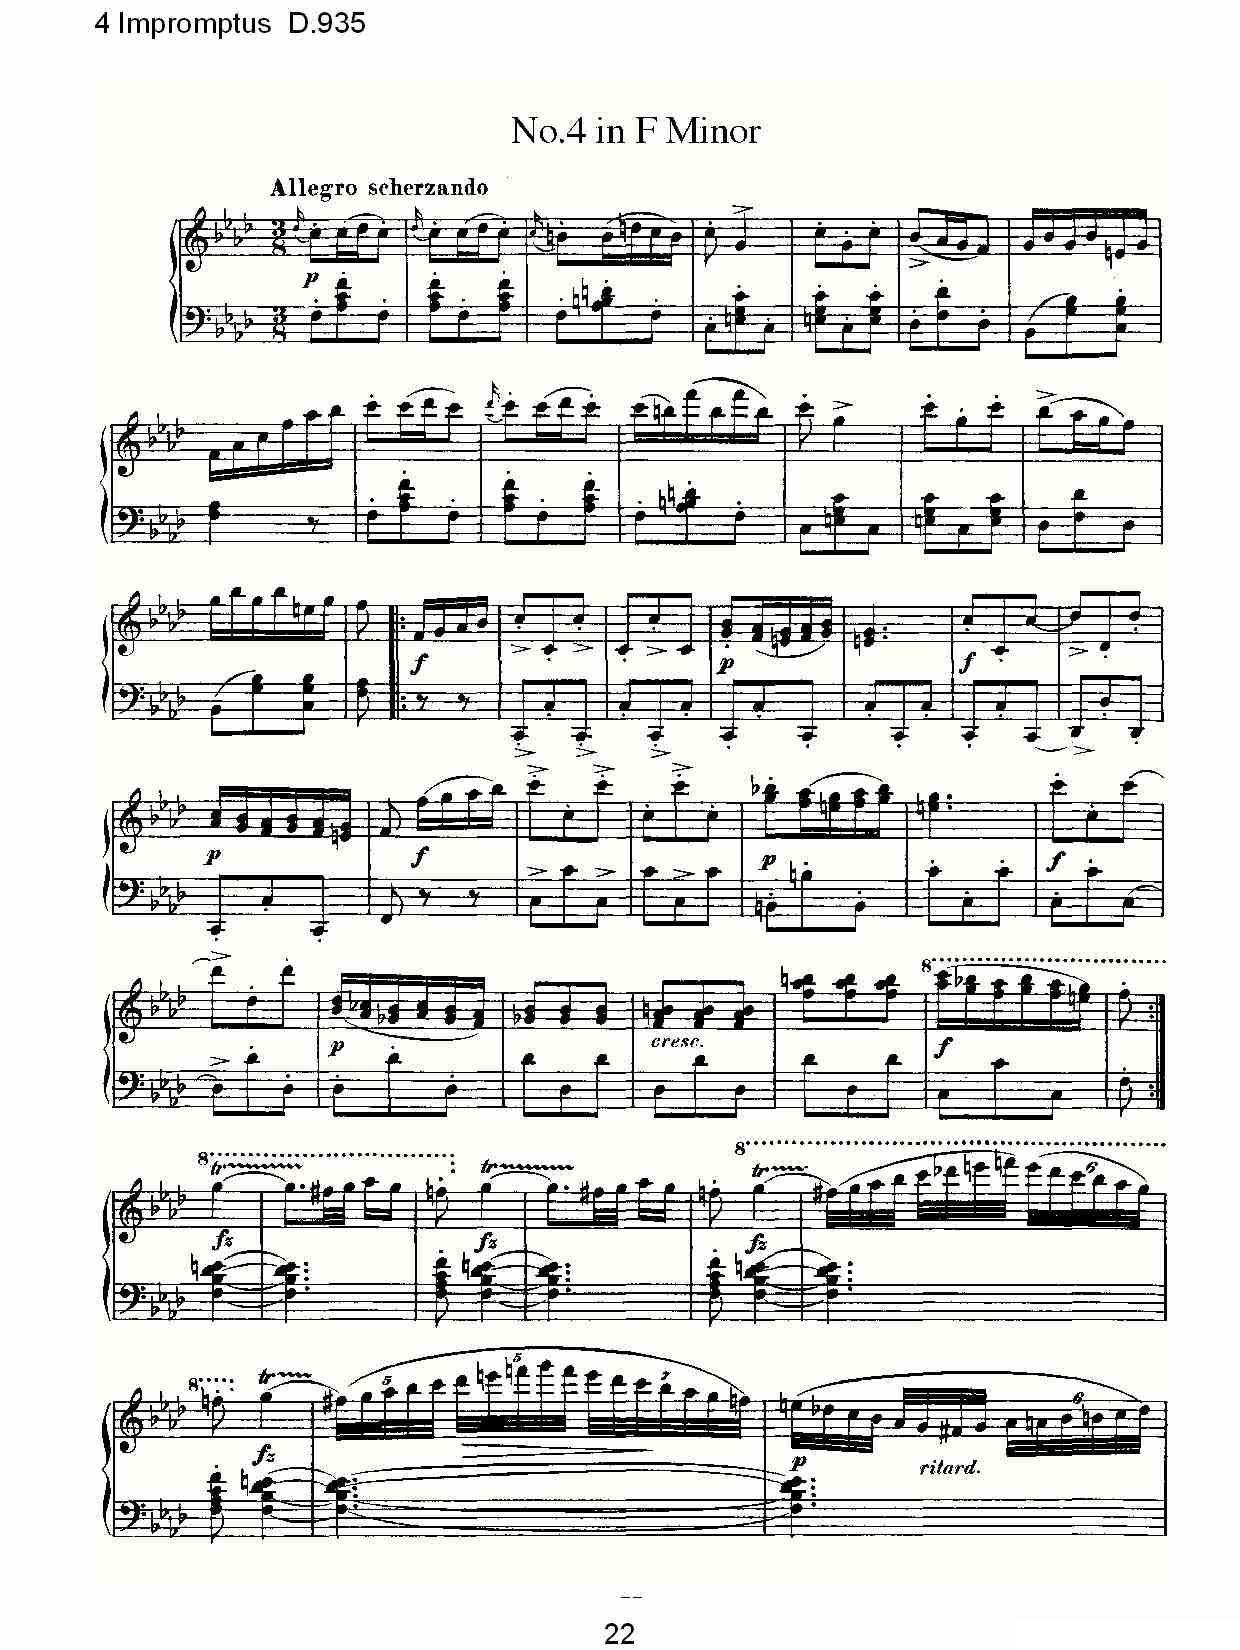 4 Impromptus D.935（4人即兴演奏D.935）钢琴曲谱（图22）